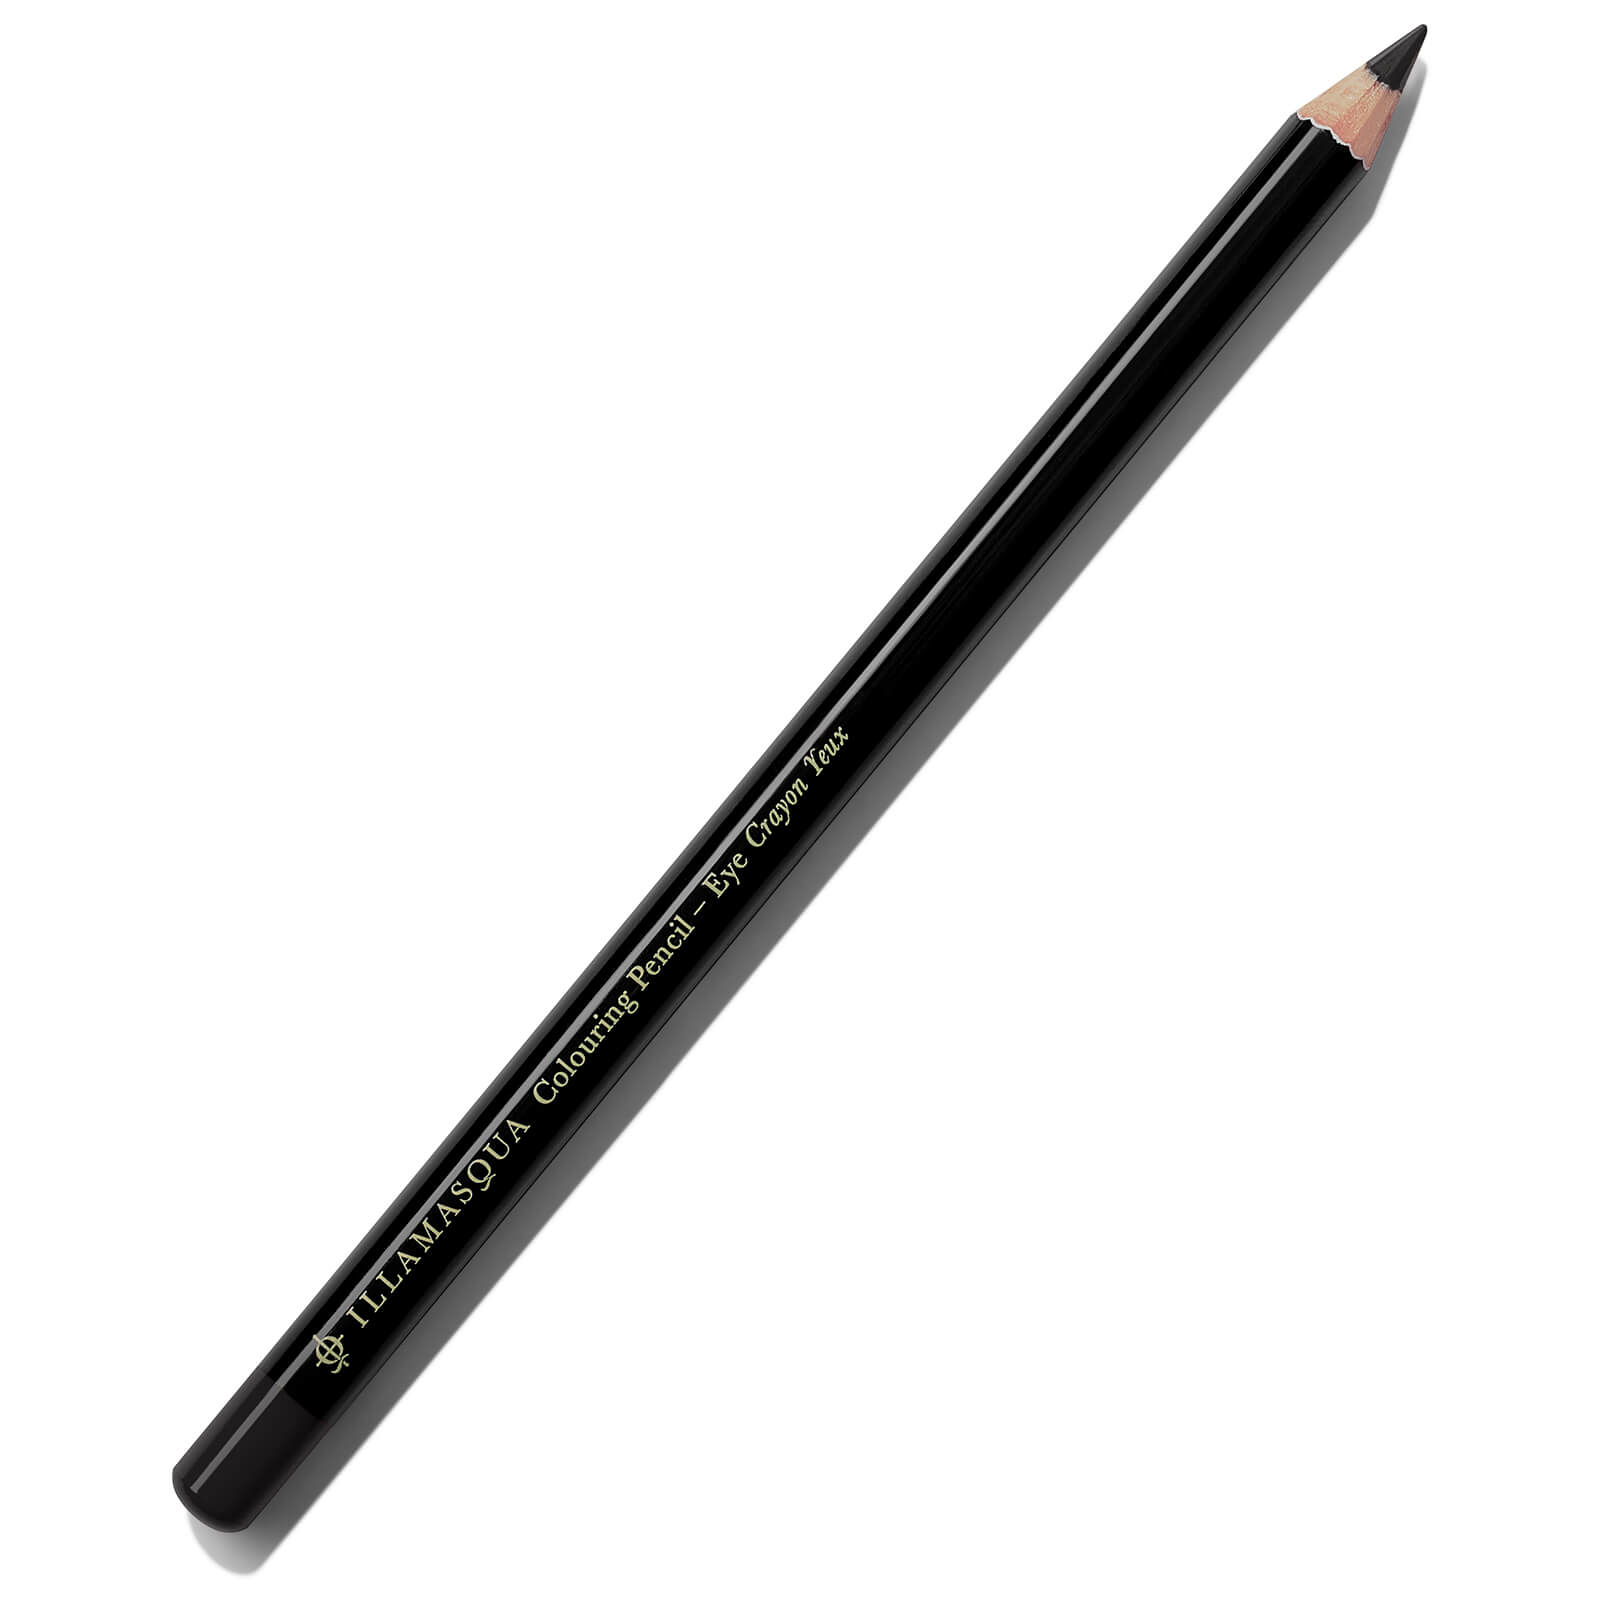 Illamasqua Colouring Eye Pencil 1.4g (Various Shades) - S.O.P.H.I.E